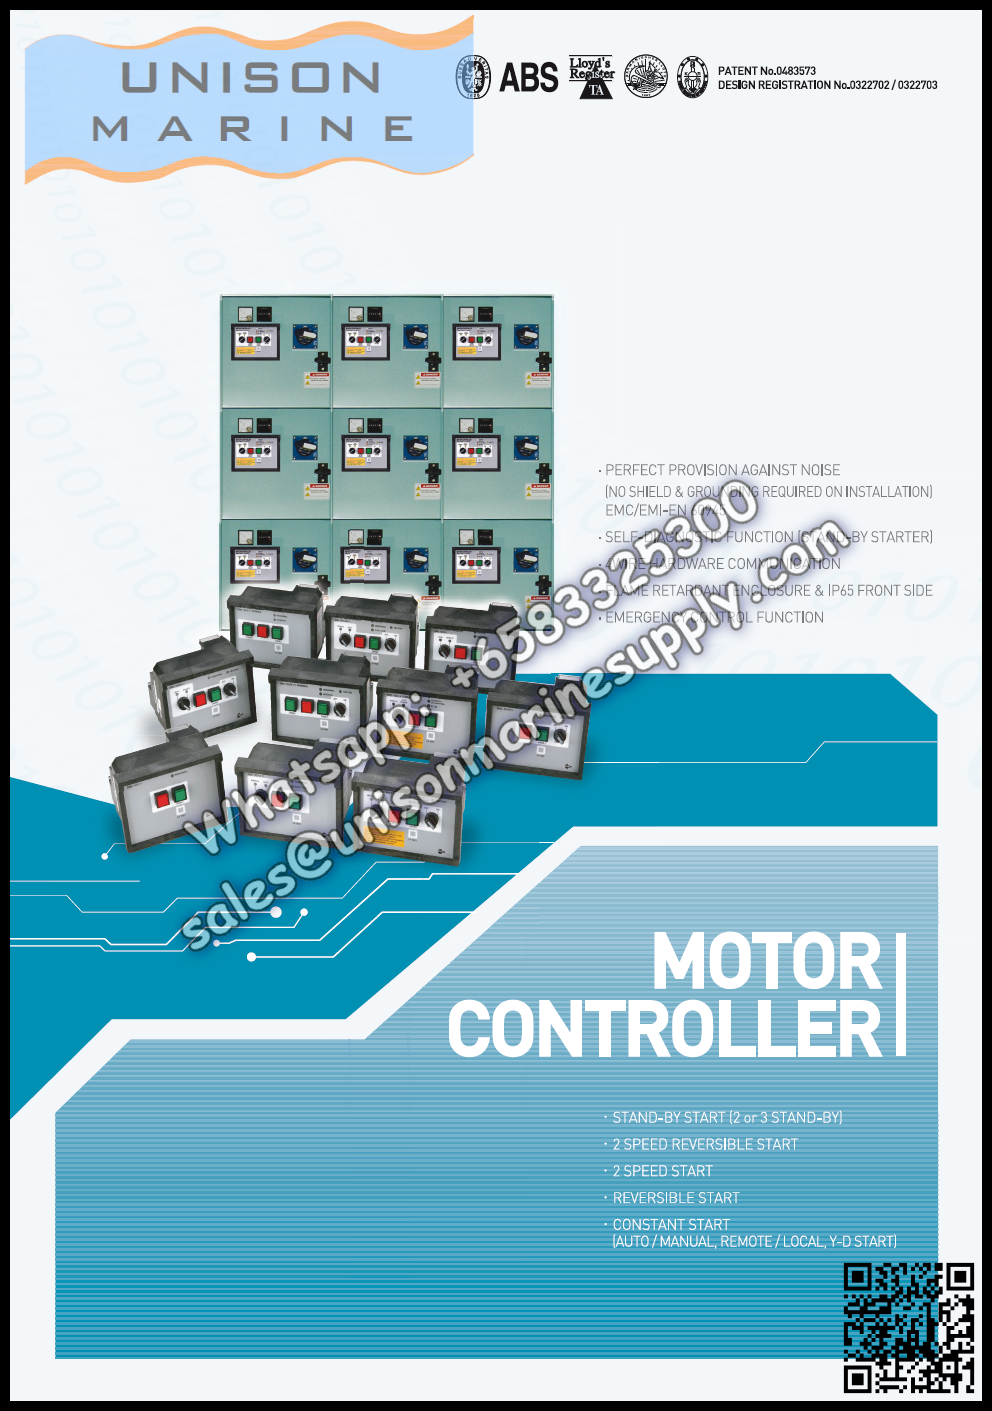 Westronics（LUXCO）Marine motor controller : SMC-501